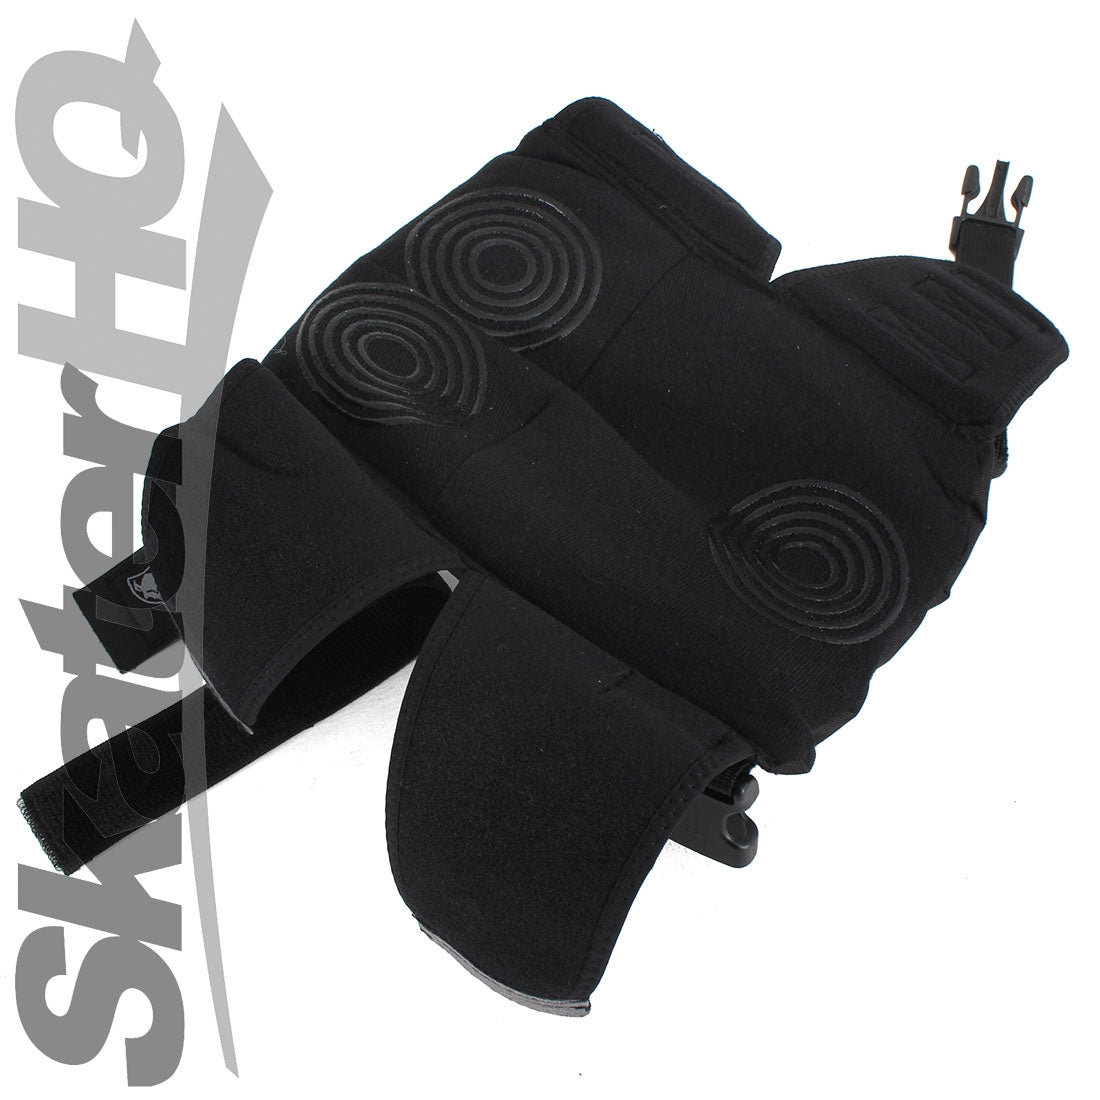 TSG Rollerderby Knee 3.0 - Medium Protective Gear